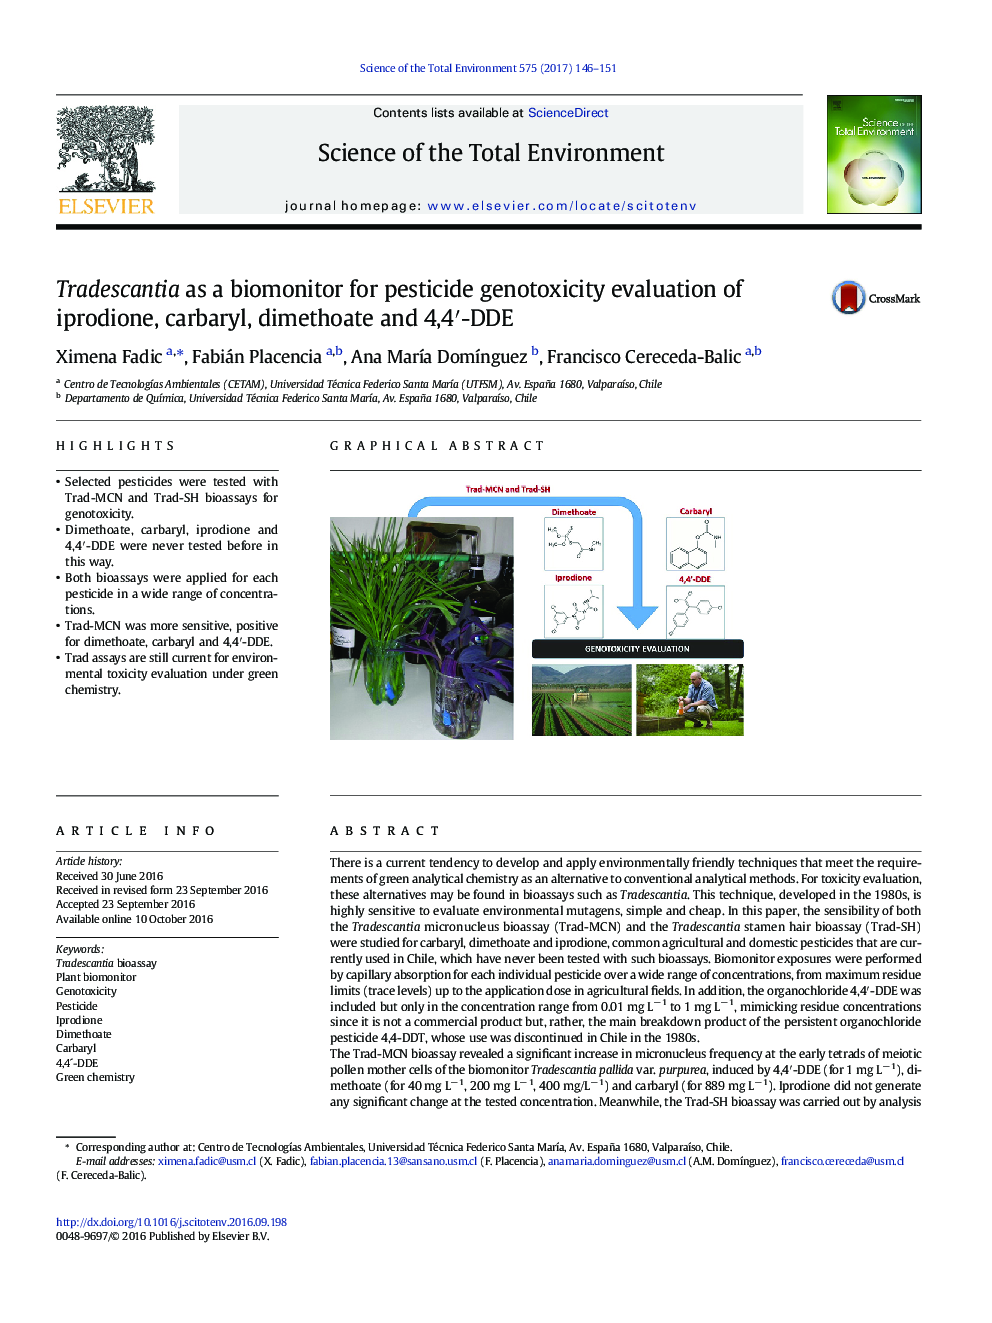 Tradescantia as a biomonitor for pesticide genotoxicity evaluation of iprodione, carbaryl, dimethoate and 4,4â²-DDE